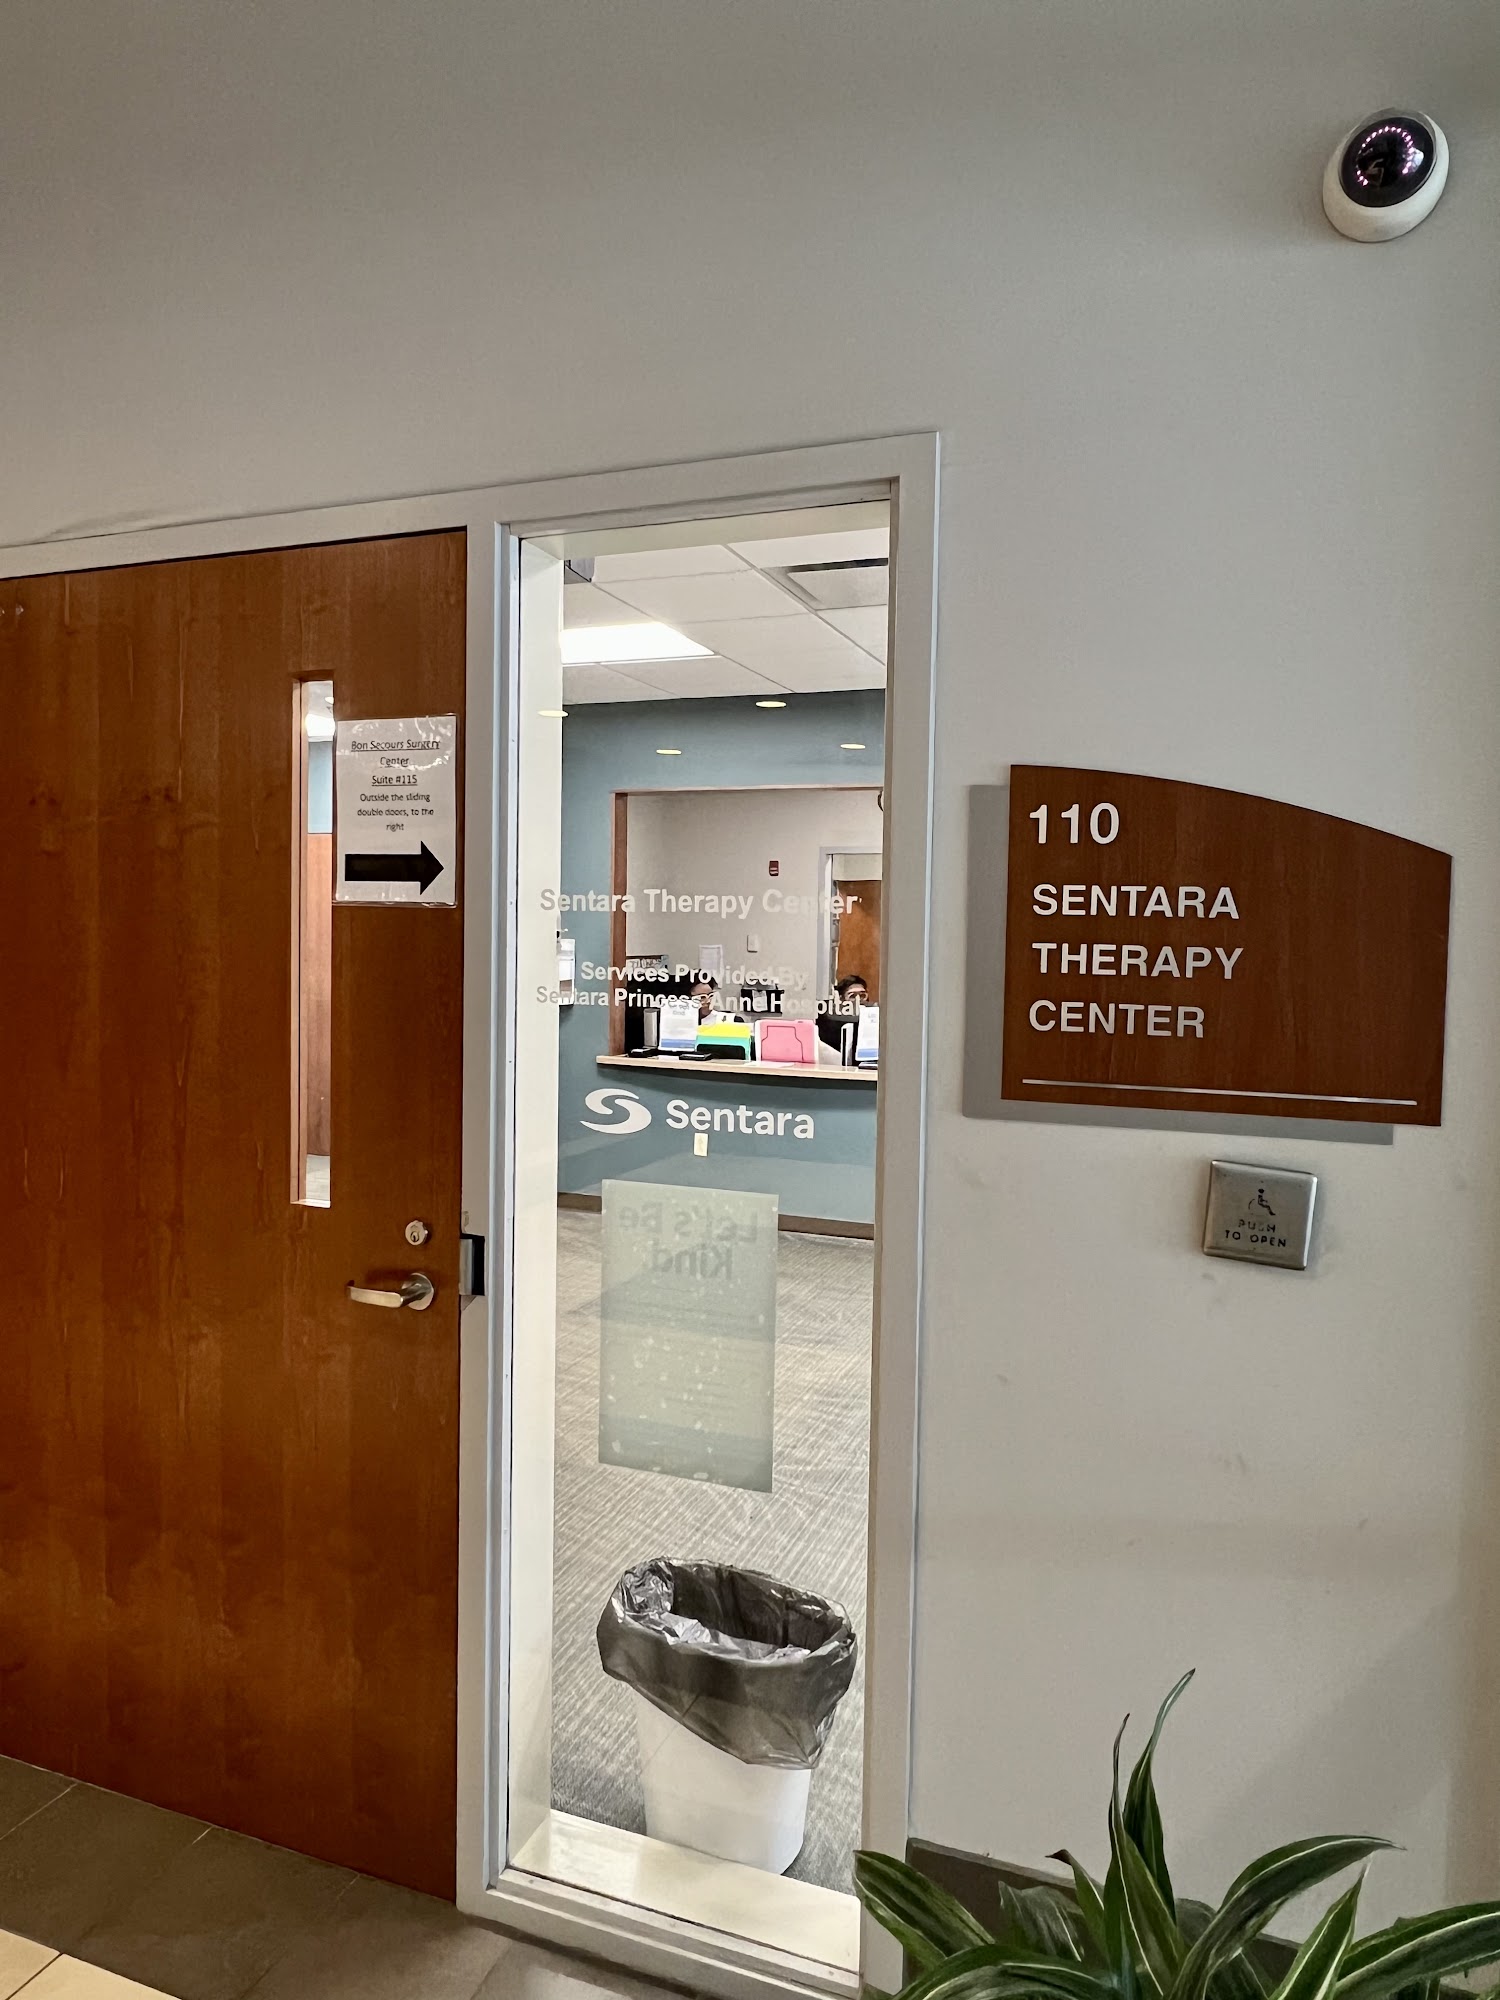 Sentara Therapy Center - Healthy Way